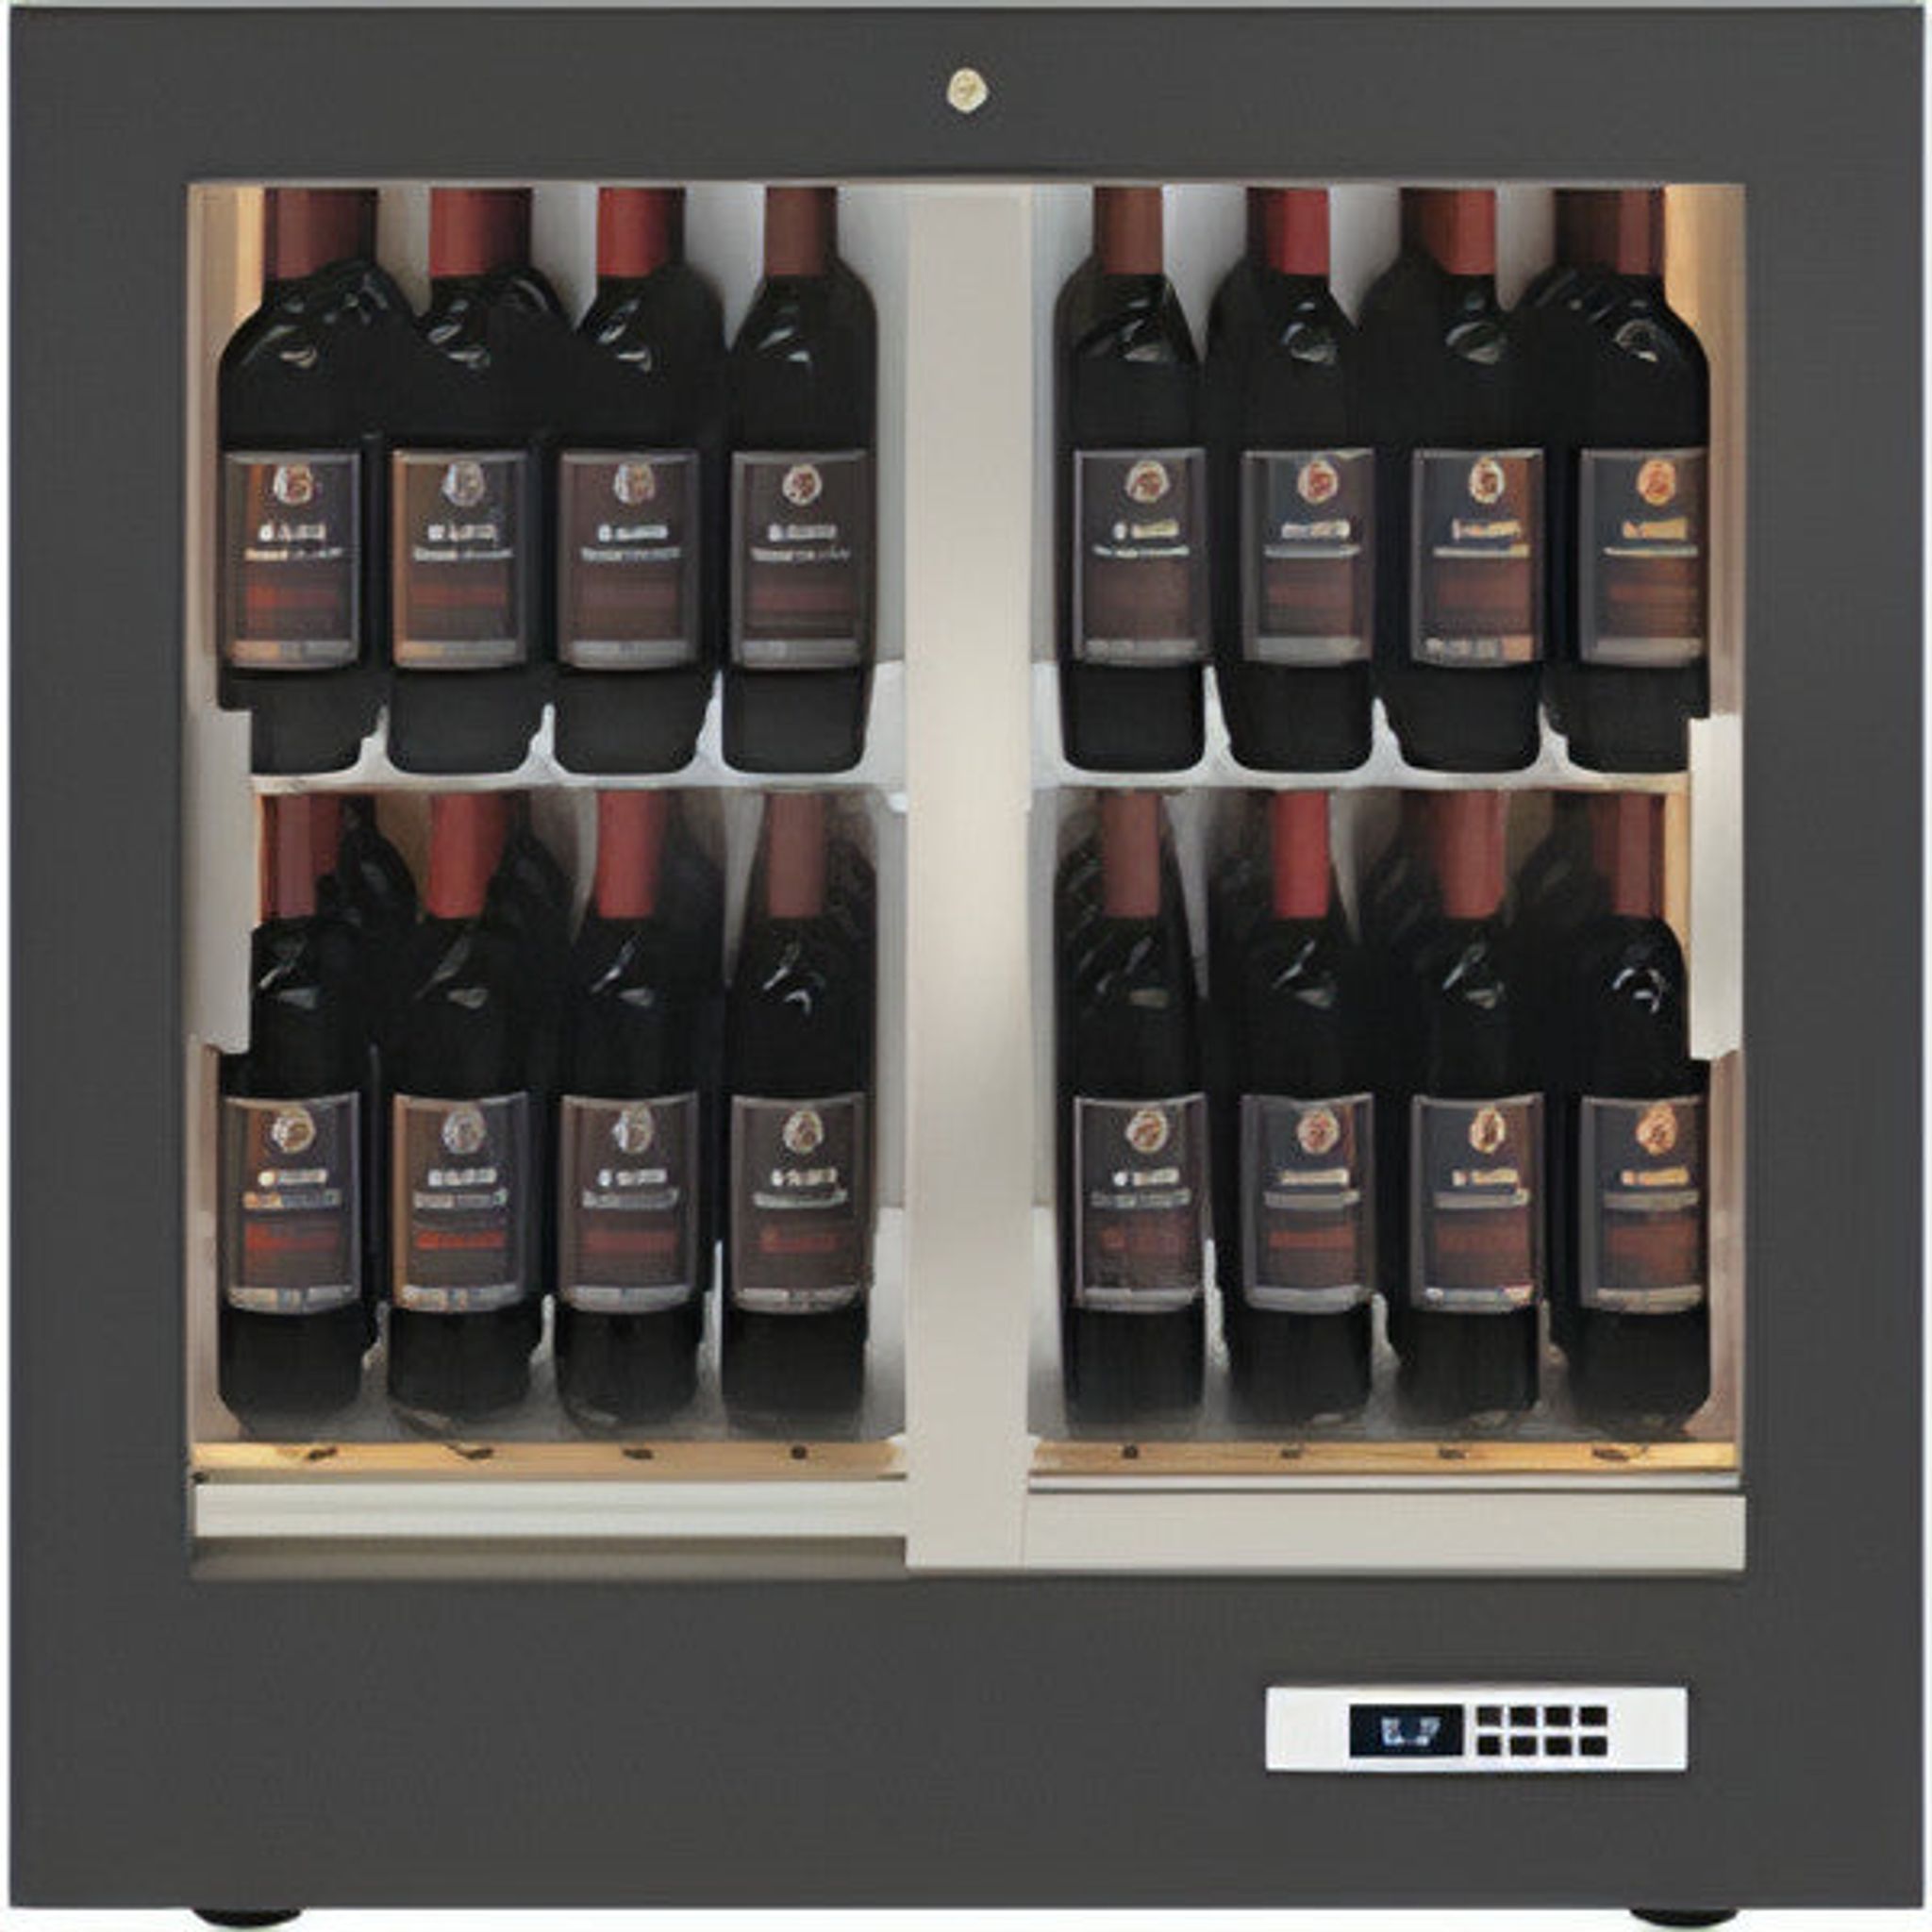 Teca Vino - Wine Wall TV23 - For Restaurant Use